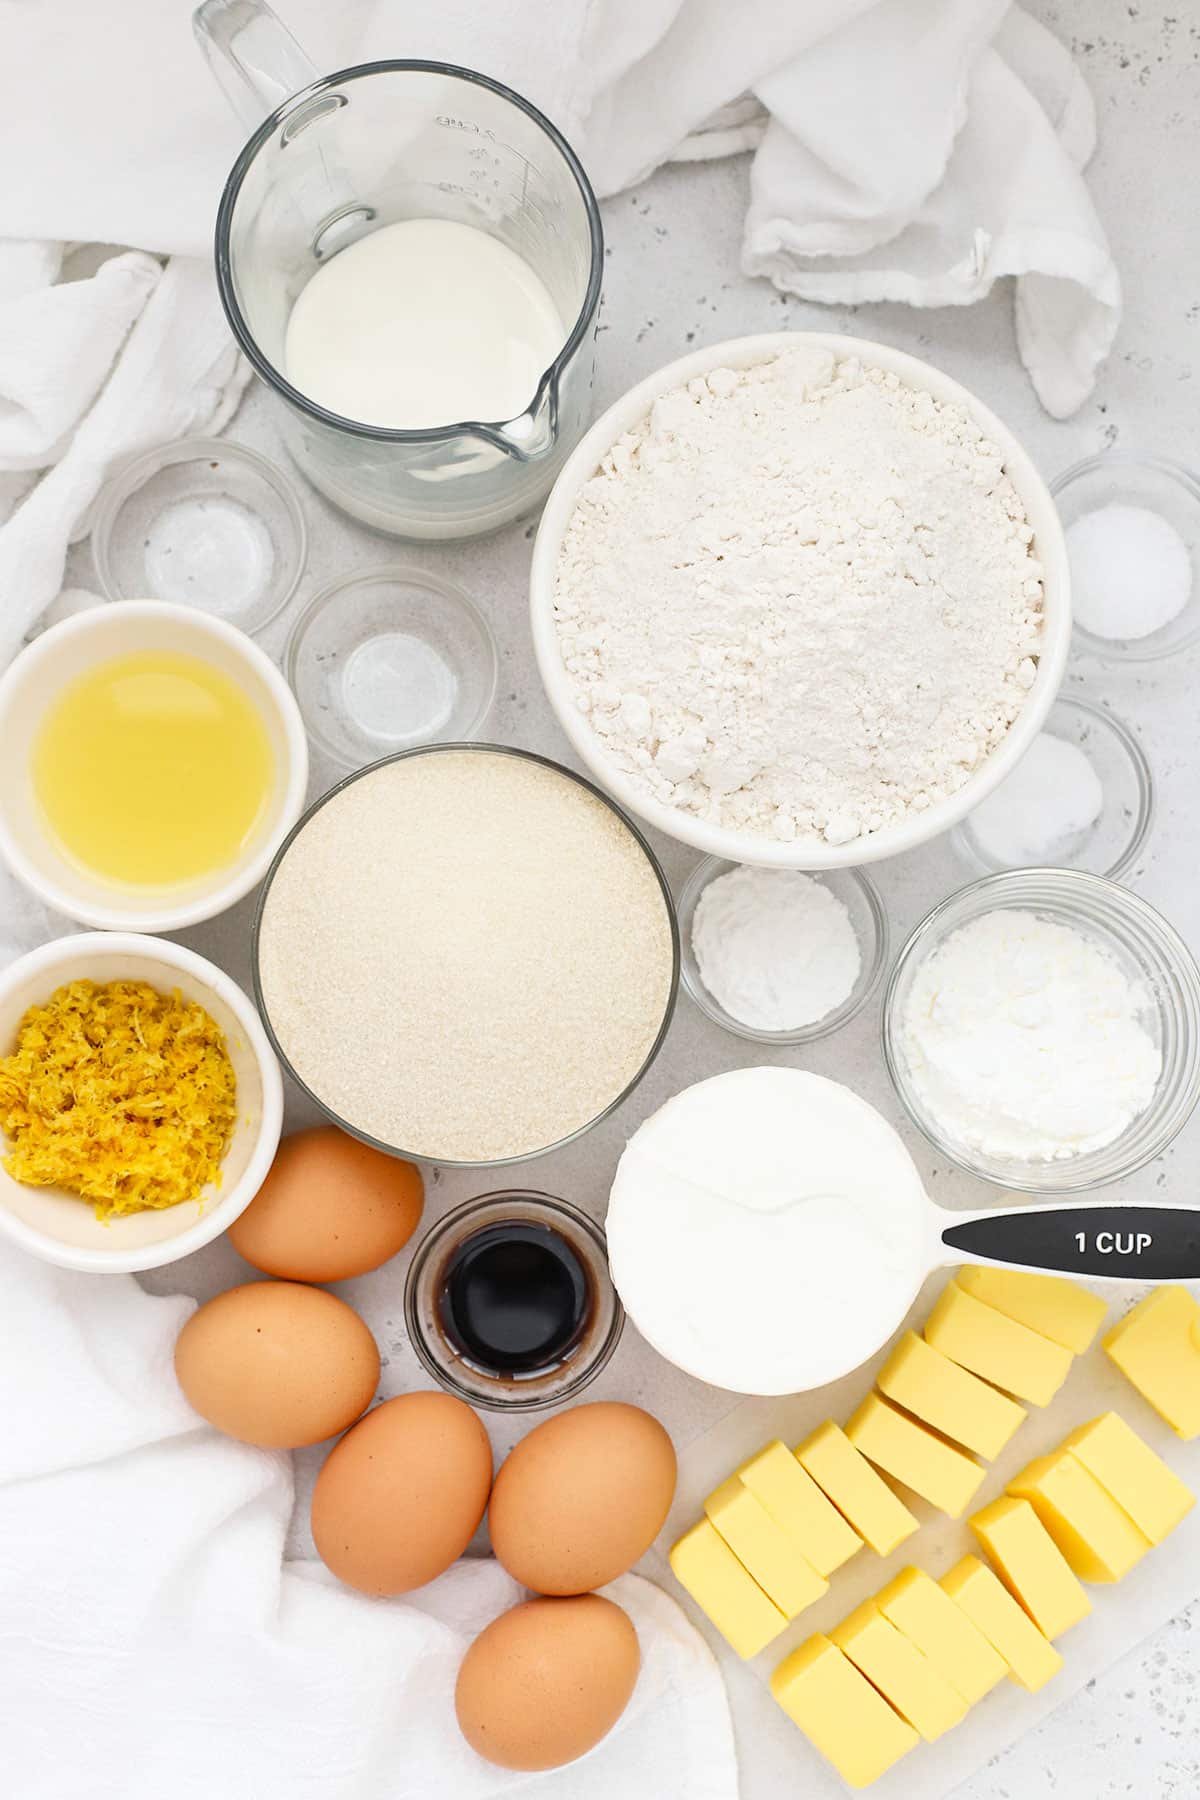 Ingredients for gluten-free lemon bundt cake